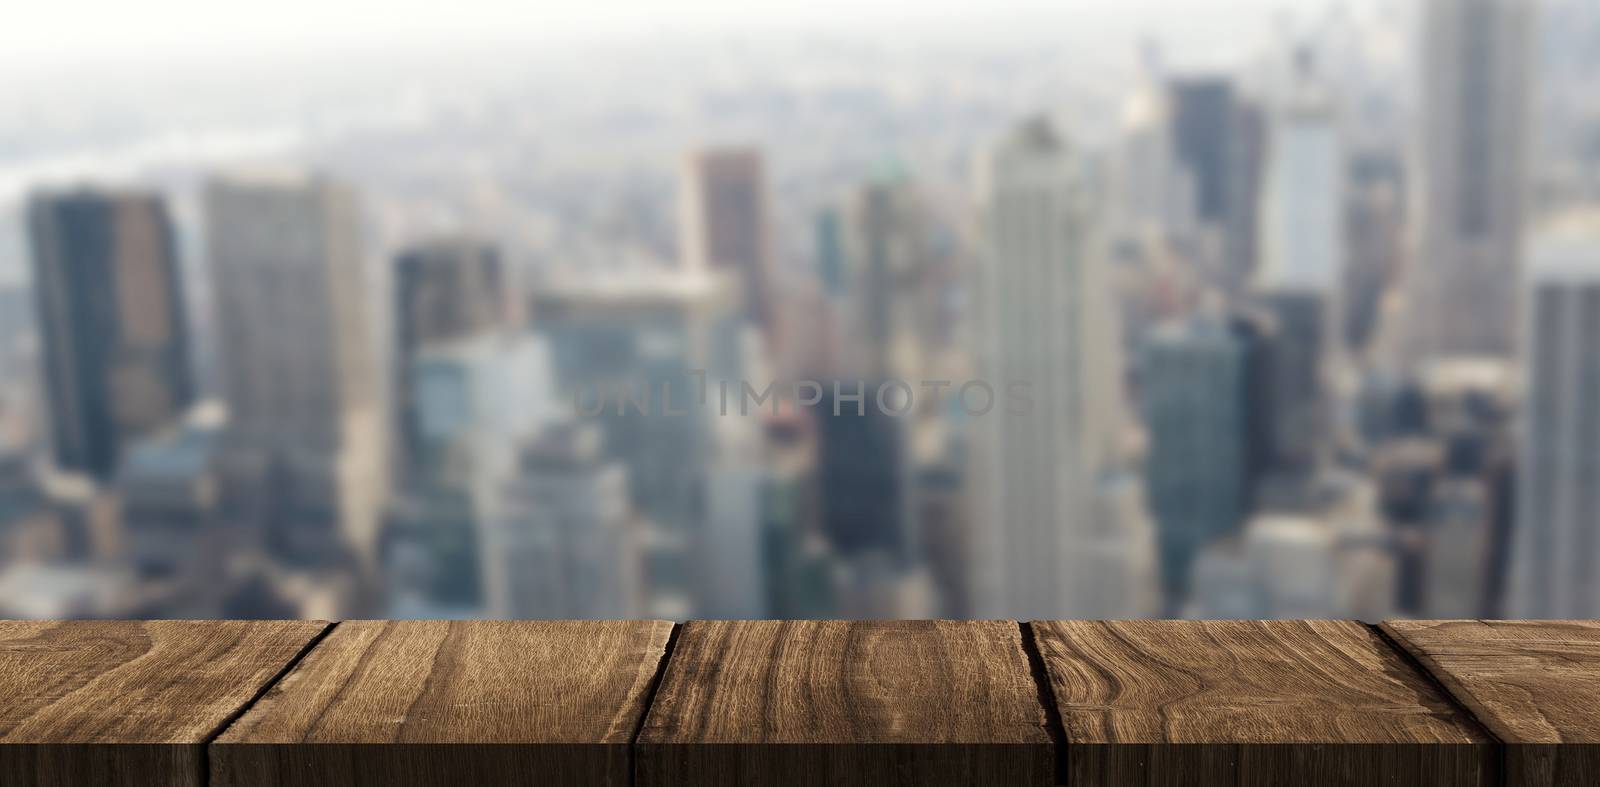 Composite image of wooden desk by Wavebreakmedia